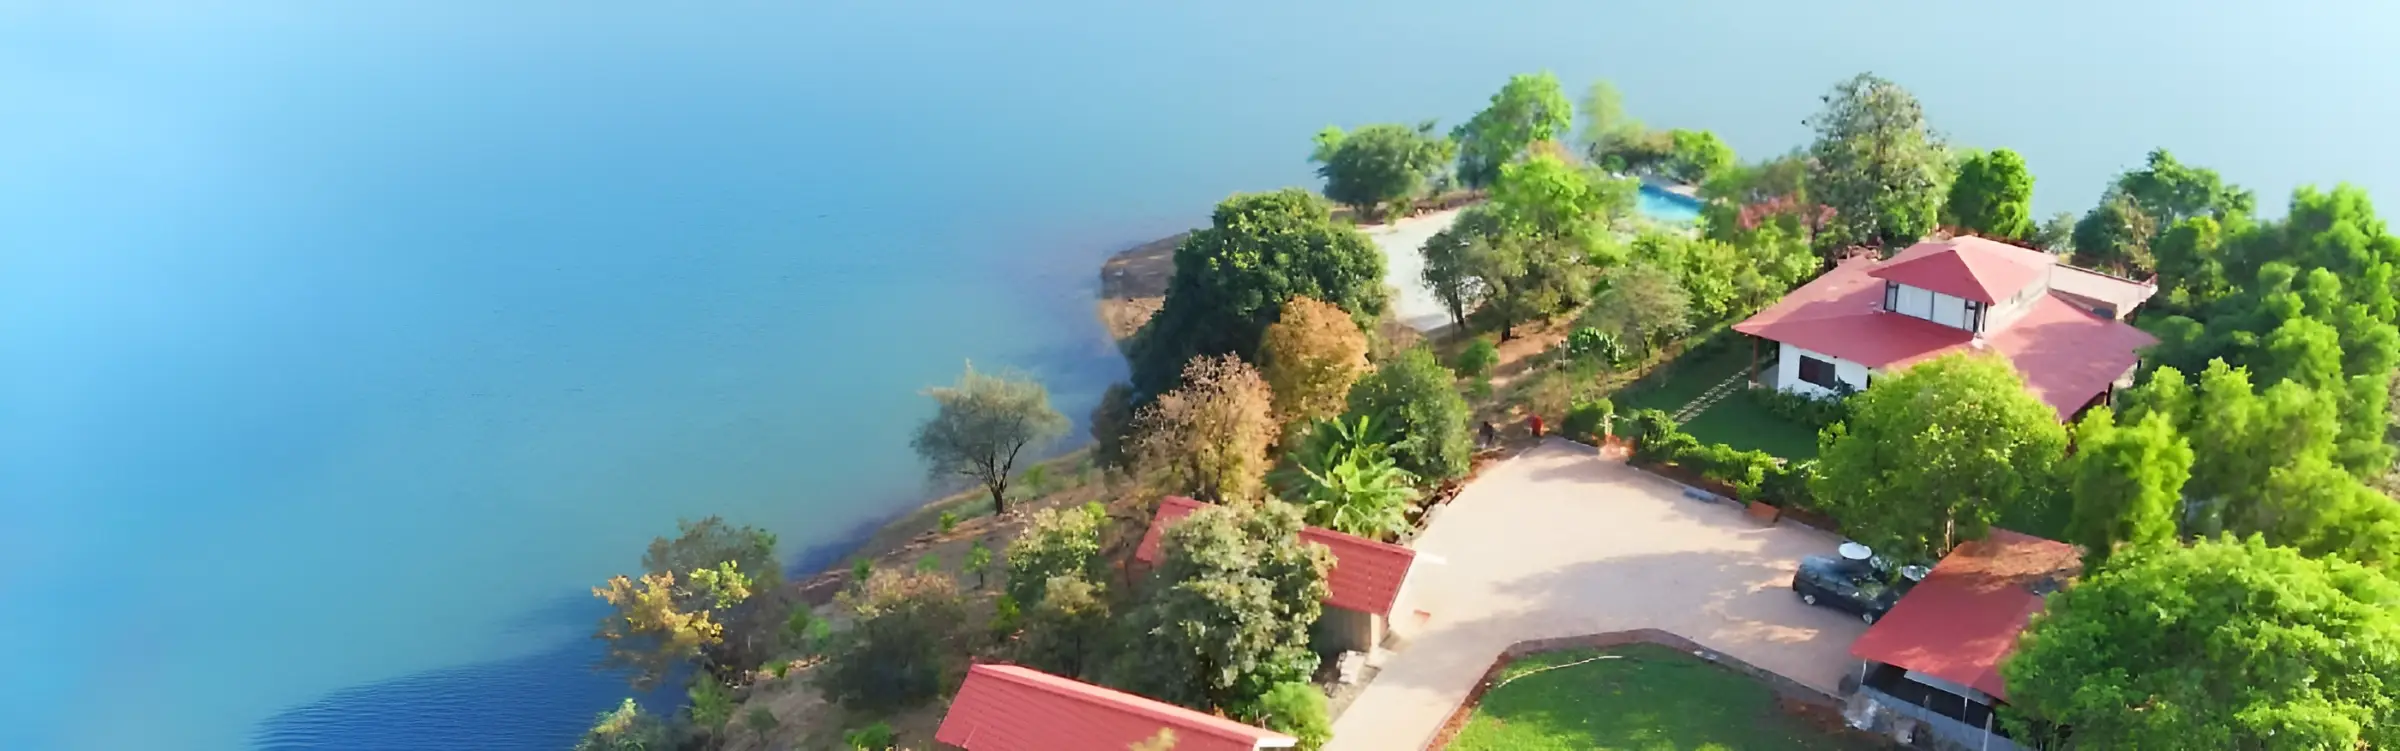 Shvas island | Luxurious resort in igatpuri